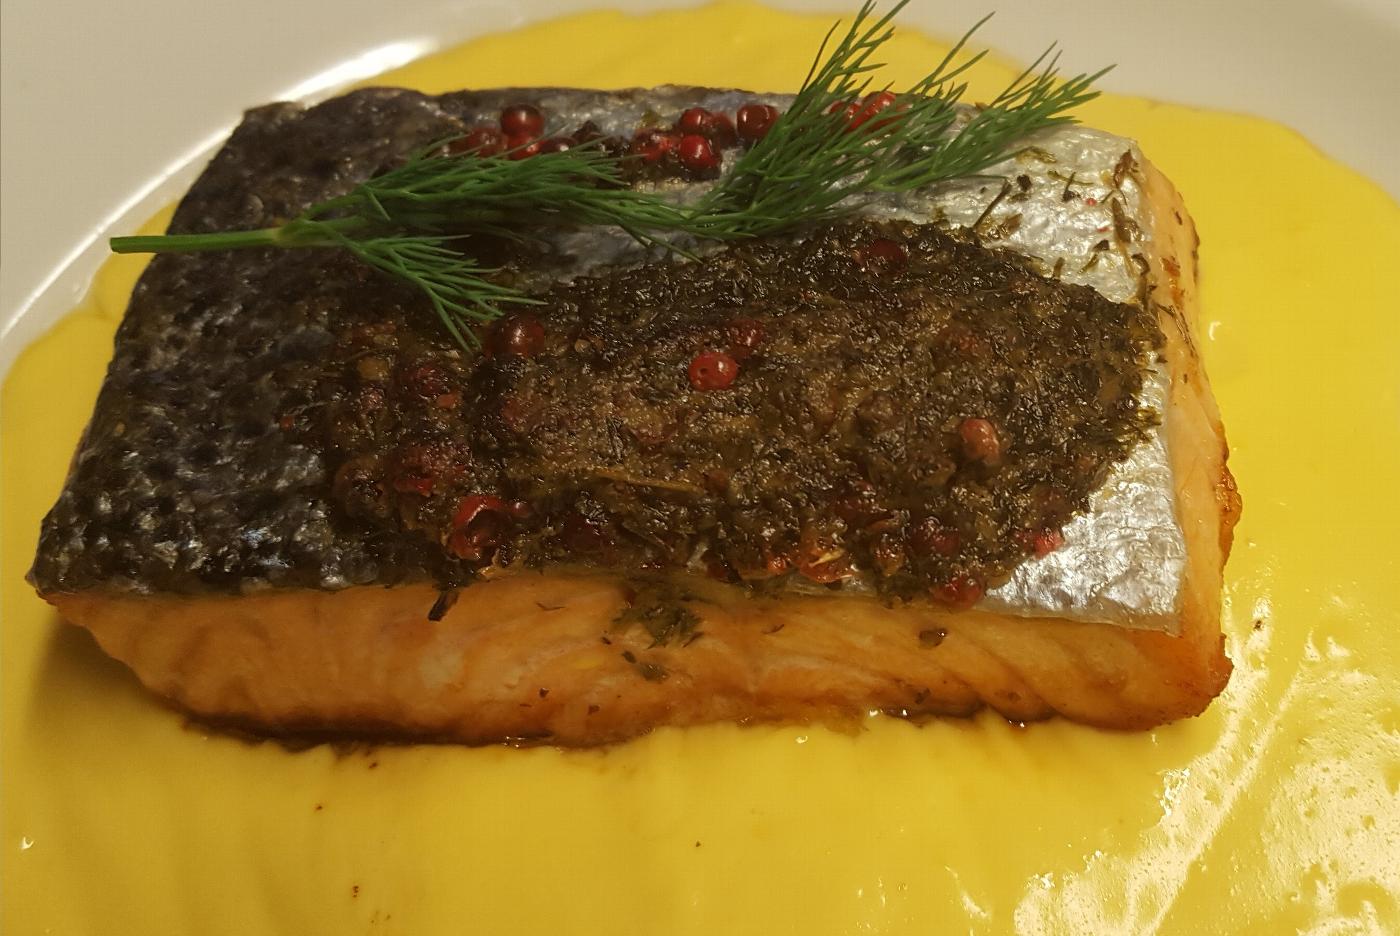 Salmon with hollandaise sauce